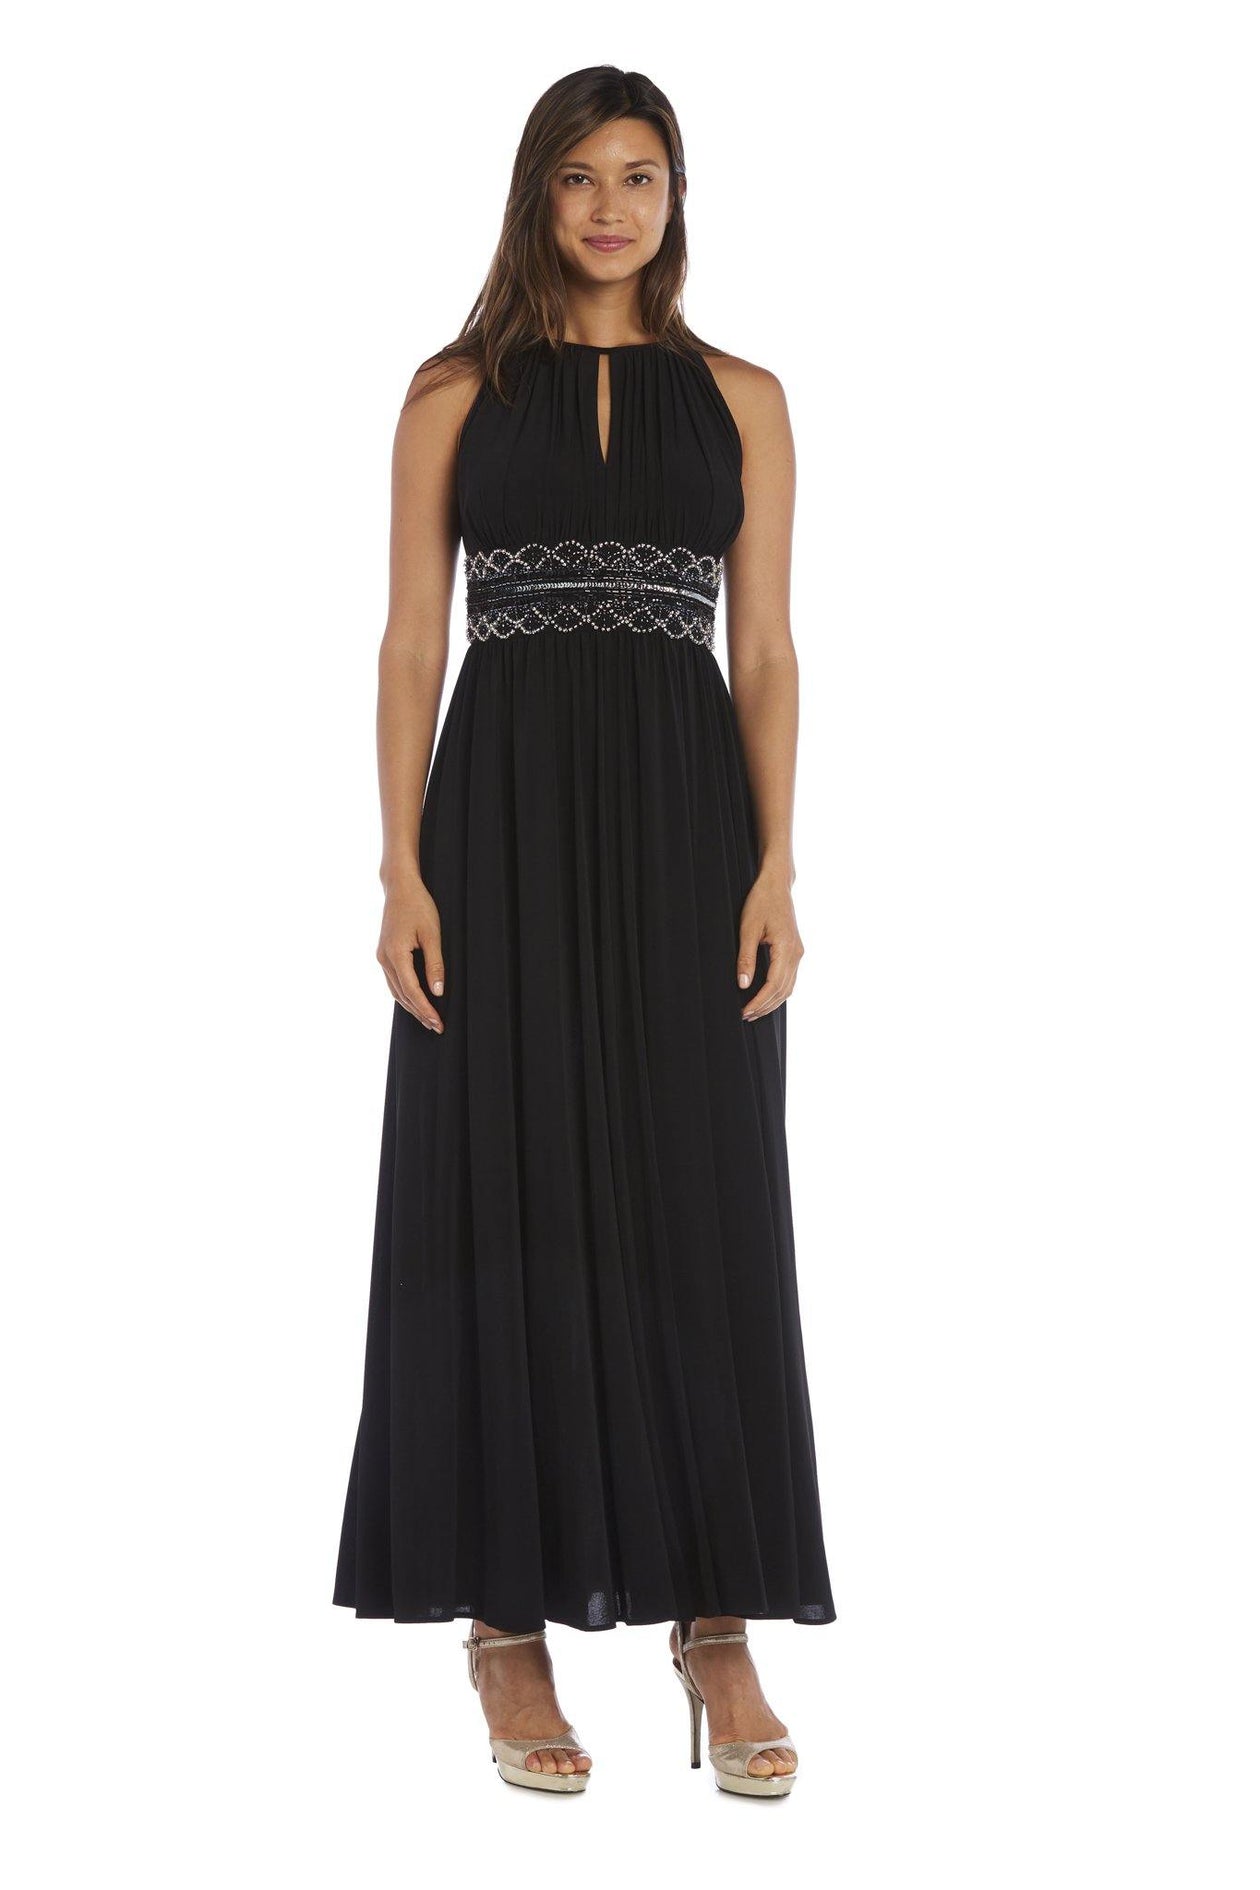 R&M Richards 1328 Long Formal Beaded Waist Dress for $100.99 – The Dress  Outlet